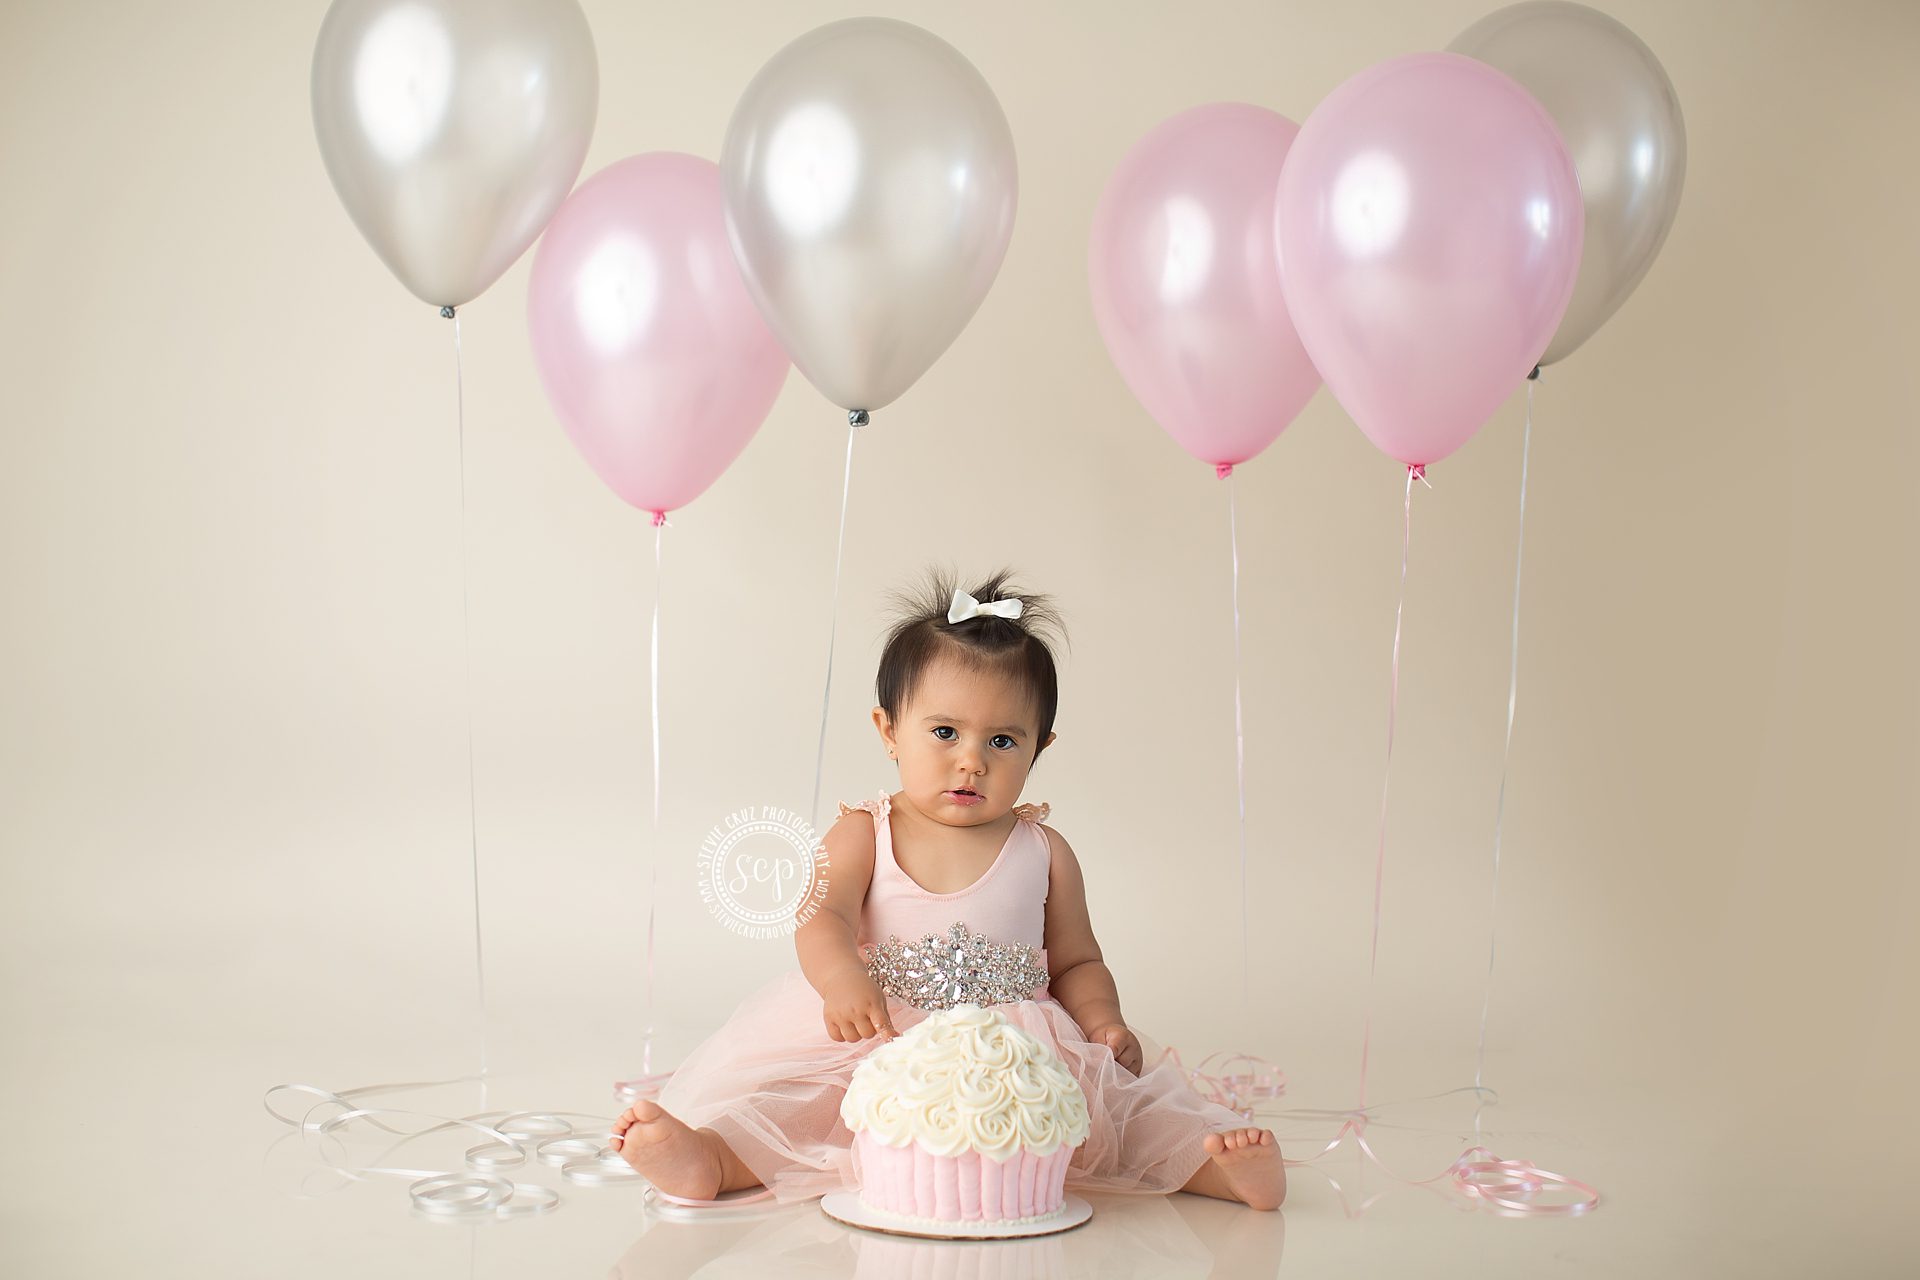 Adorable Princess cake smash photo shoot in Orange County photo studio 